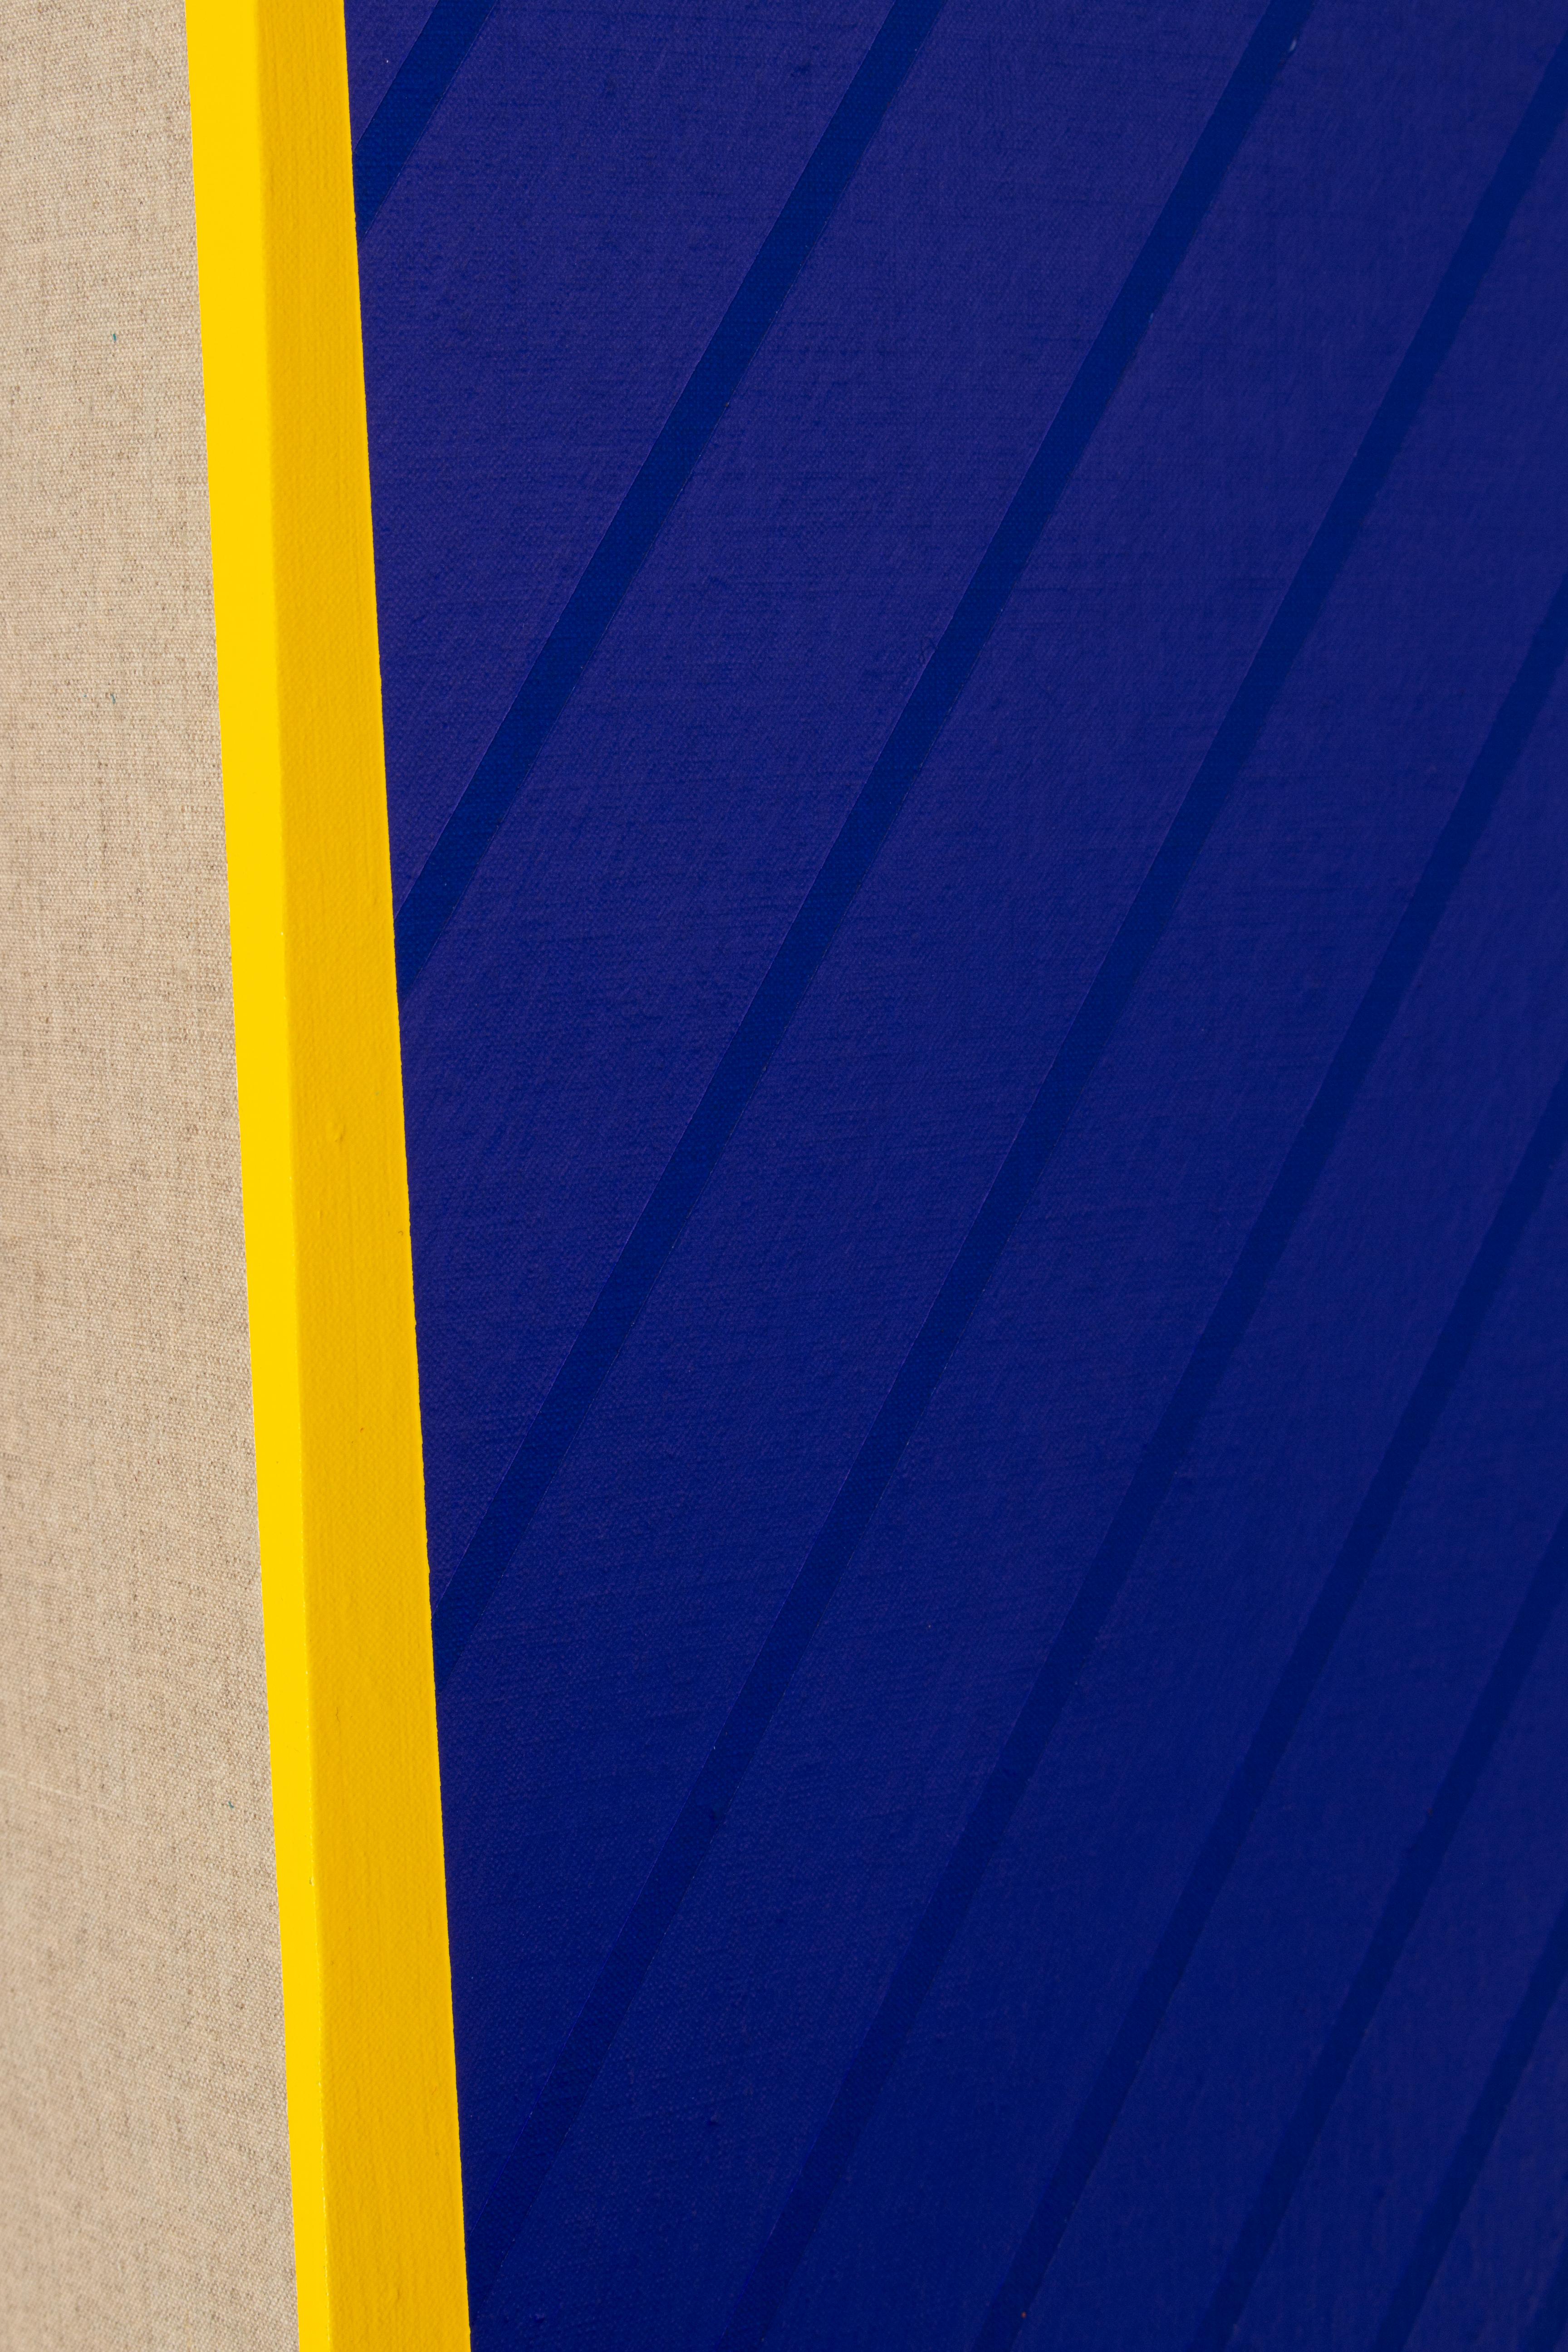 ¡Fútbol! - Deep Blue & Yellow Geometric Wall Hanging Sculpture on Linen & Panel  - Purple Abstract Sculpture by Brandon Woods